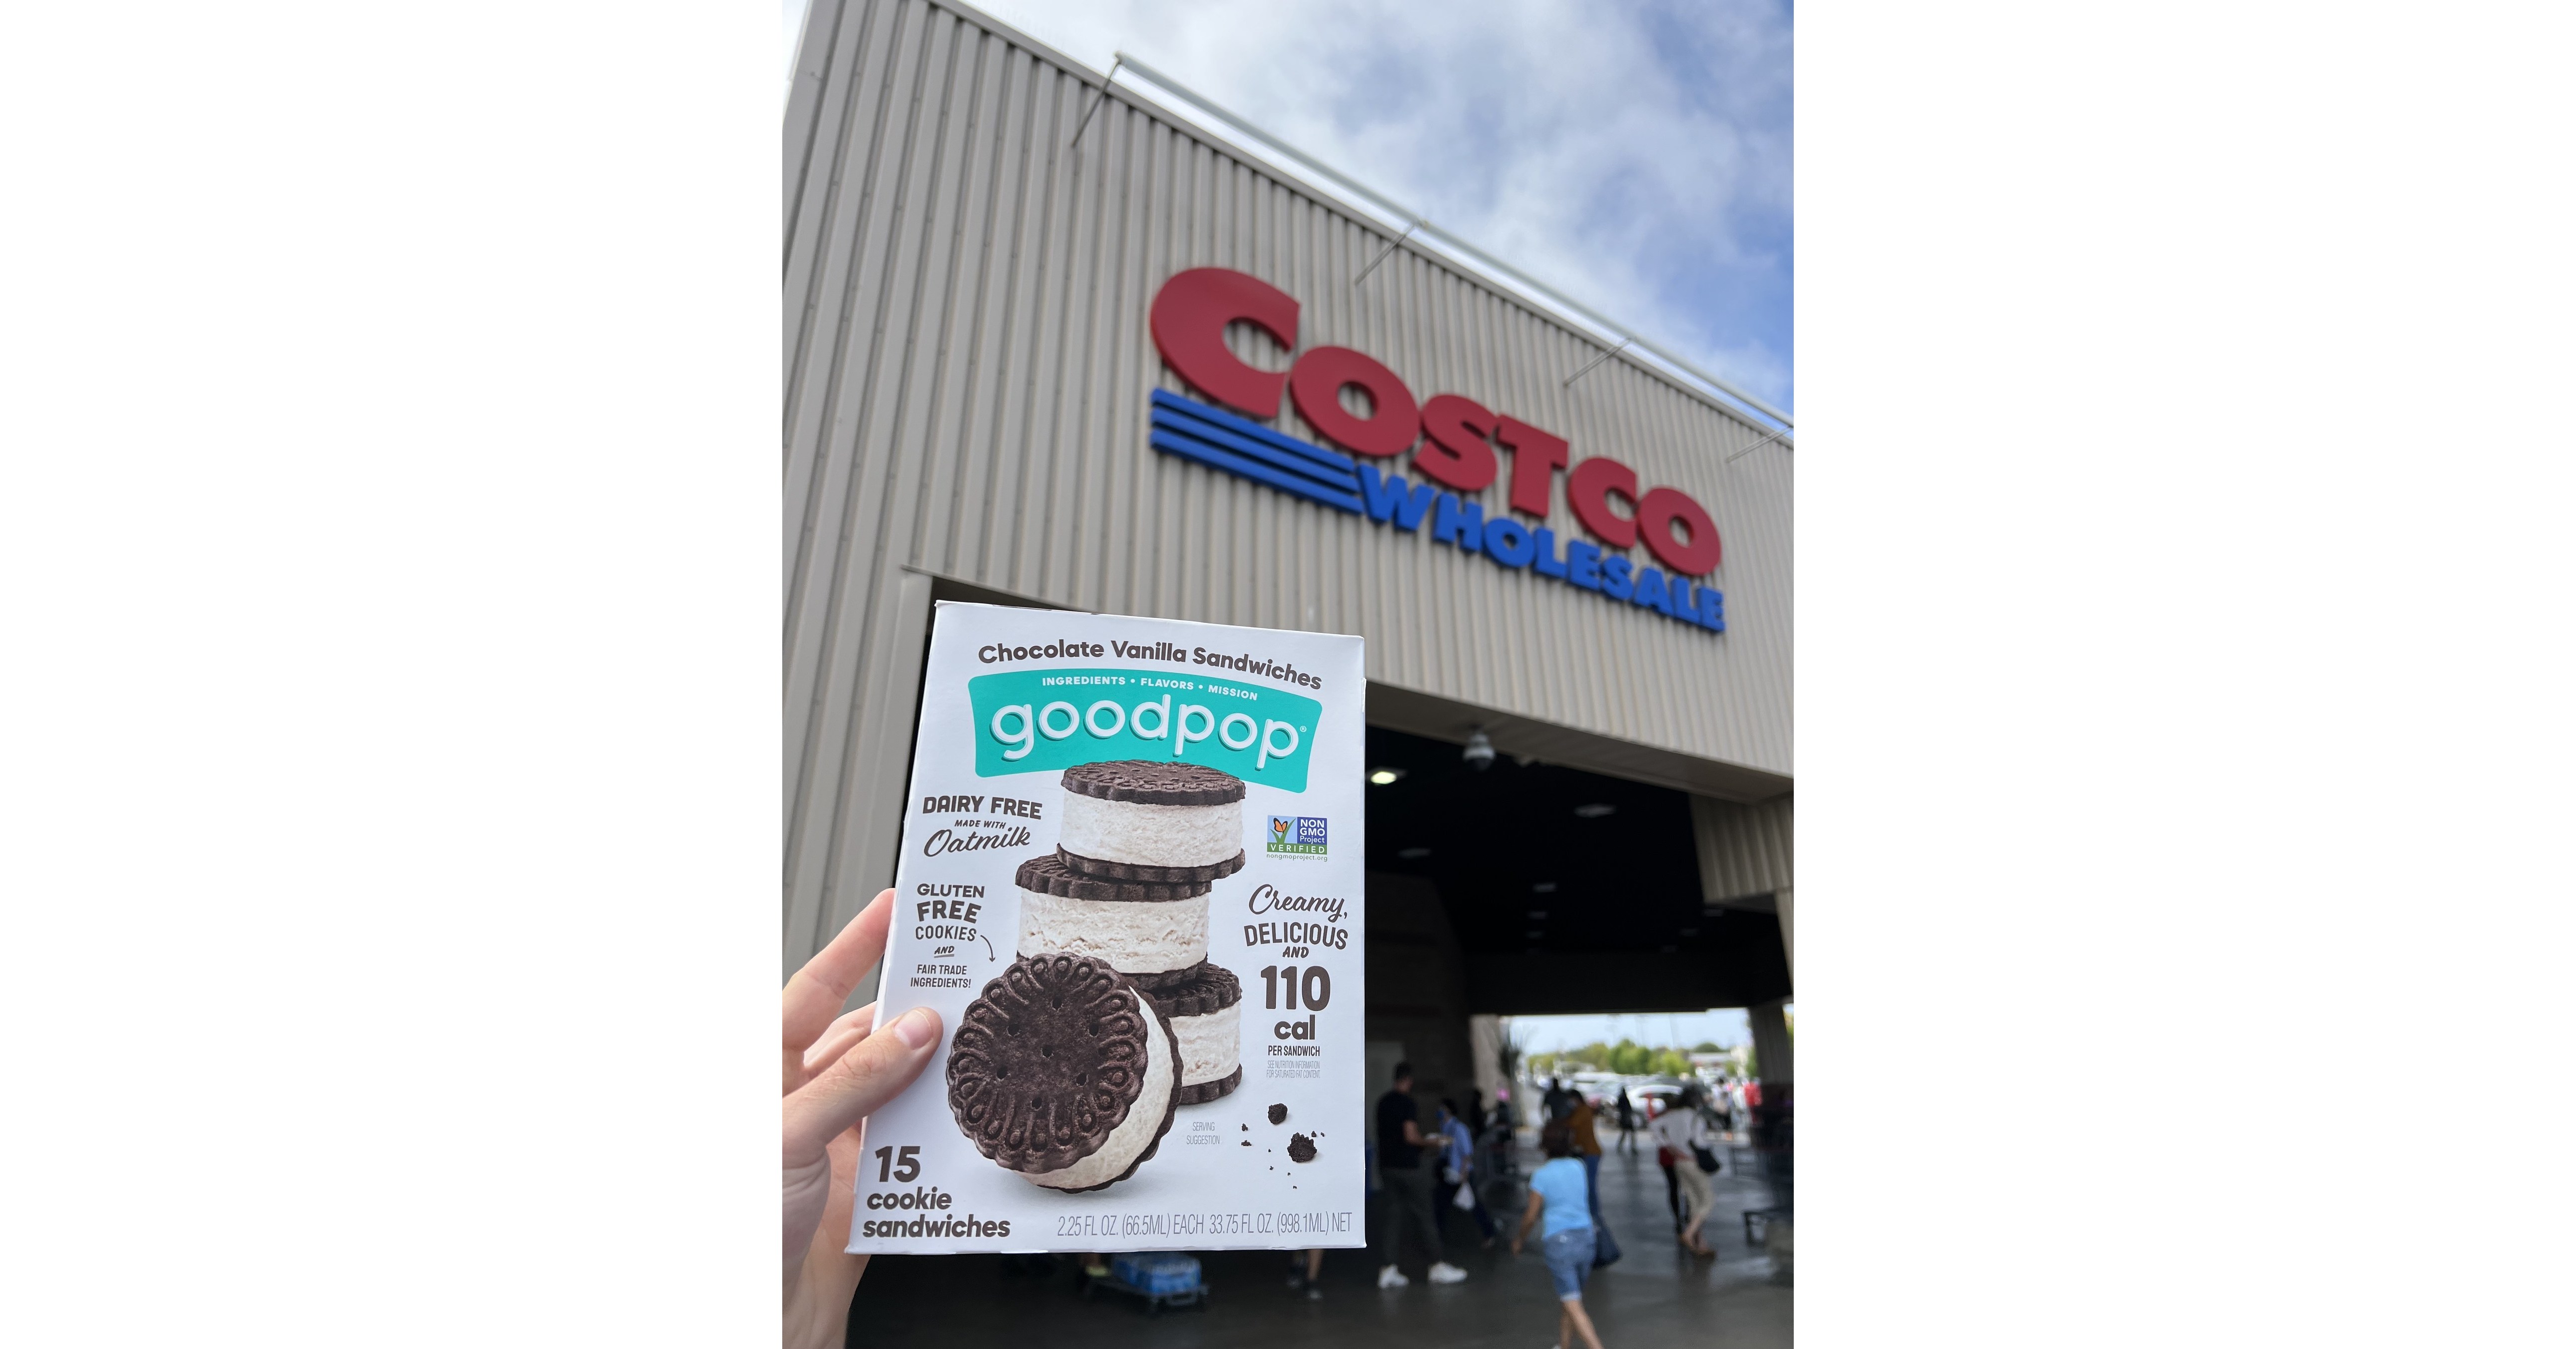 Costco Deals - 🍦NEW Super Delicious @GoodPop Pops are now